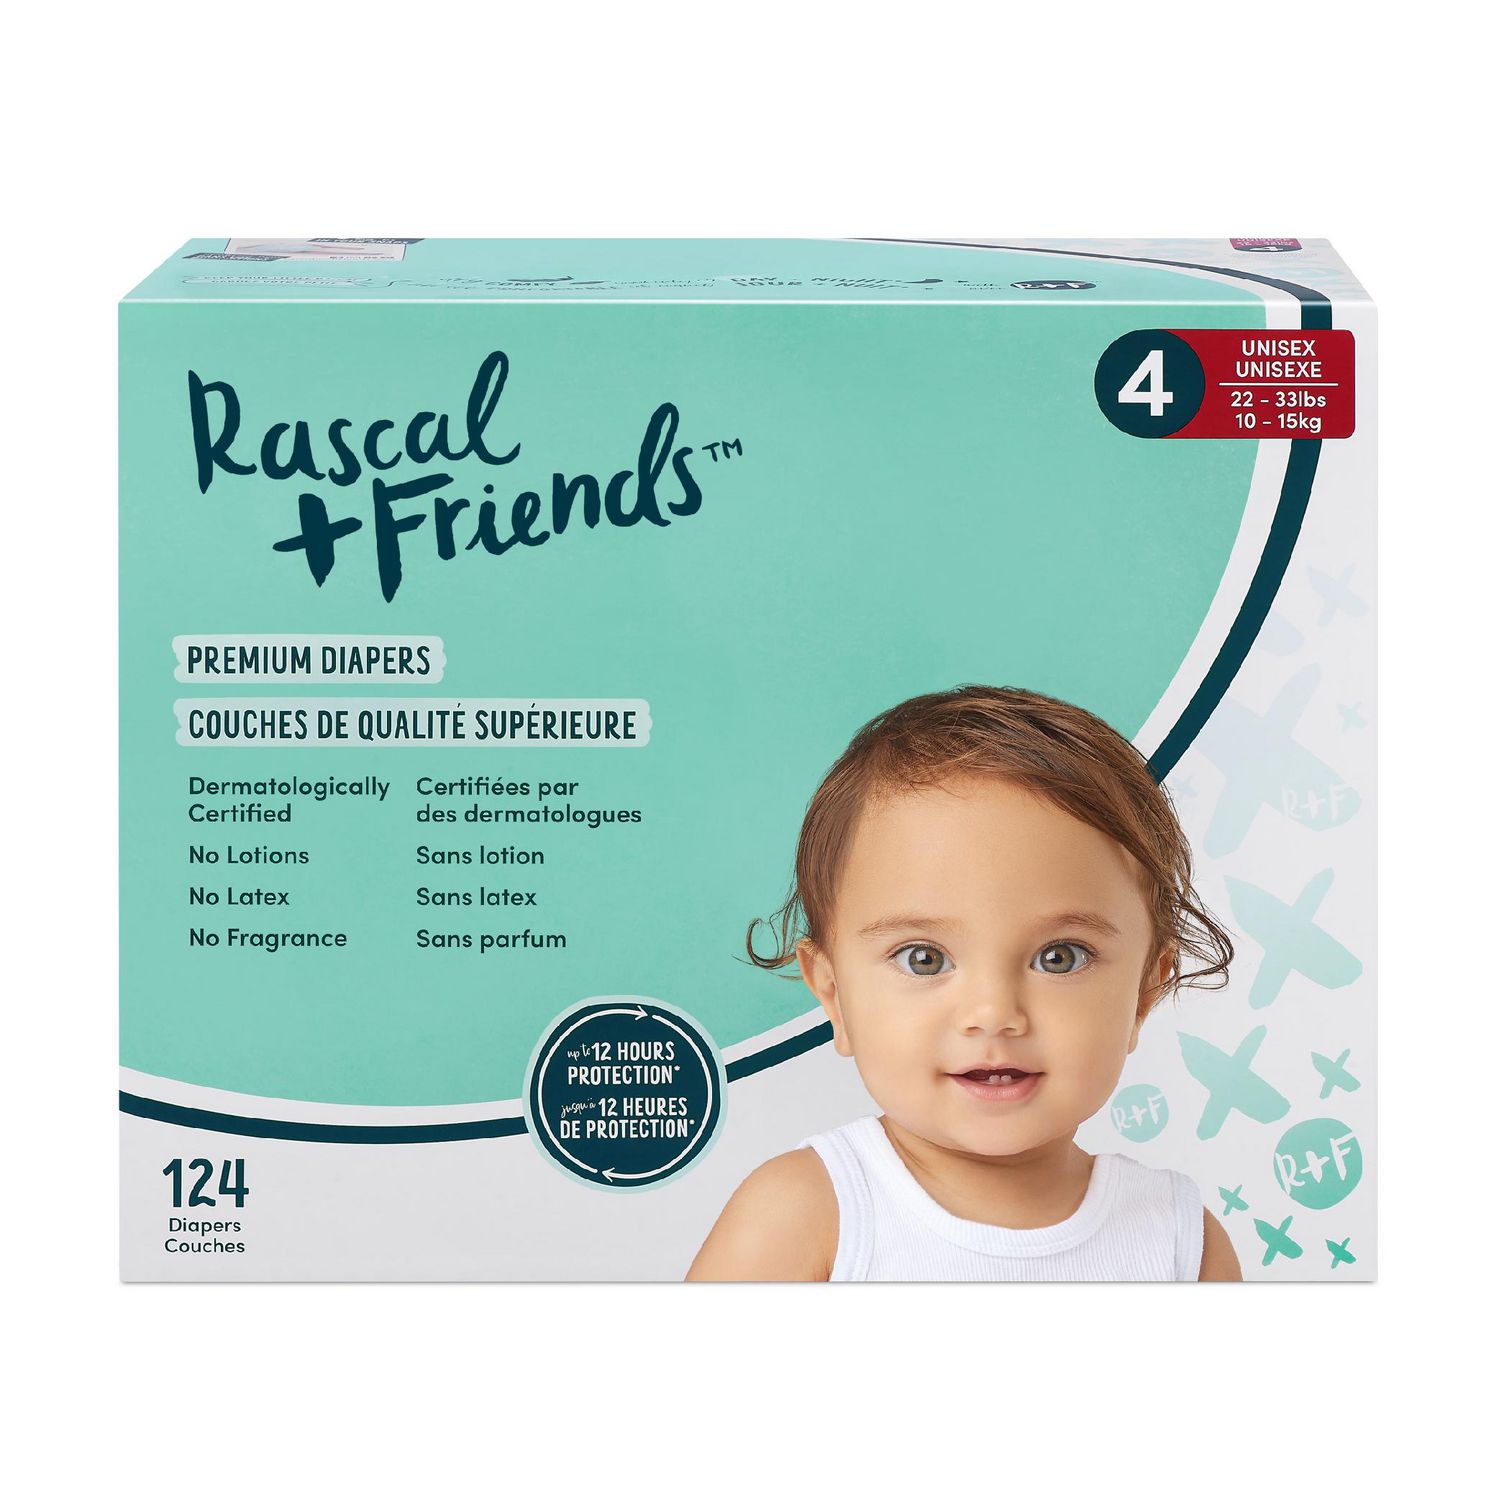 Rascal + Friends Premium Jumbo Diapers, Unisex, Sizes 1-6, Count 100-168